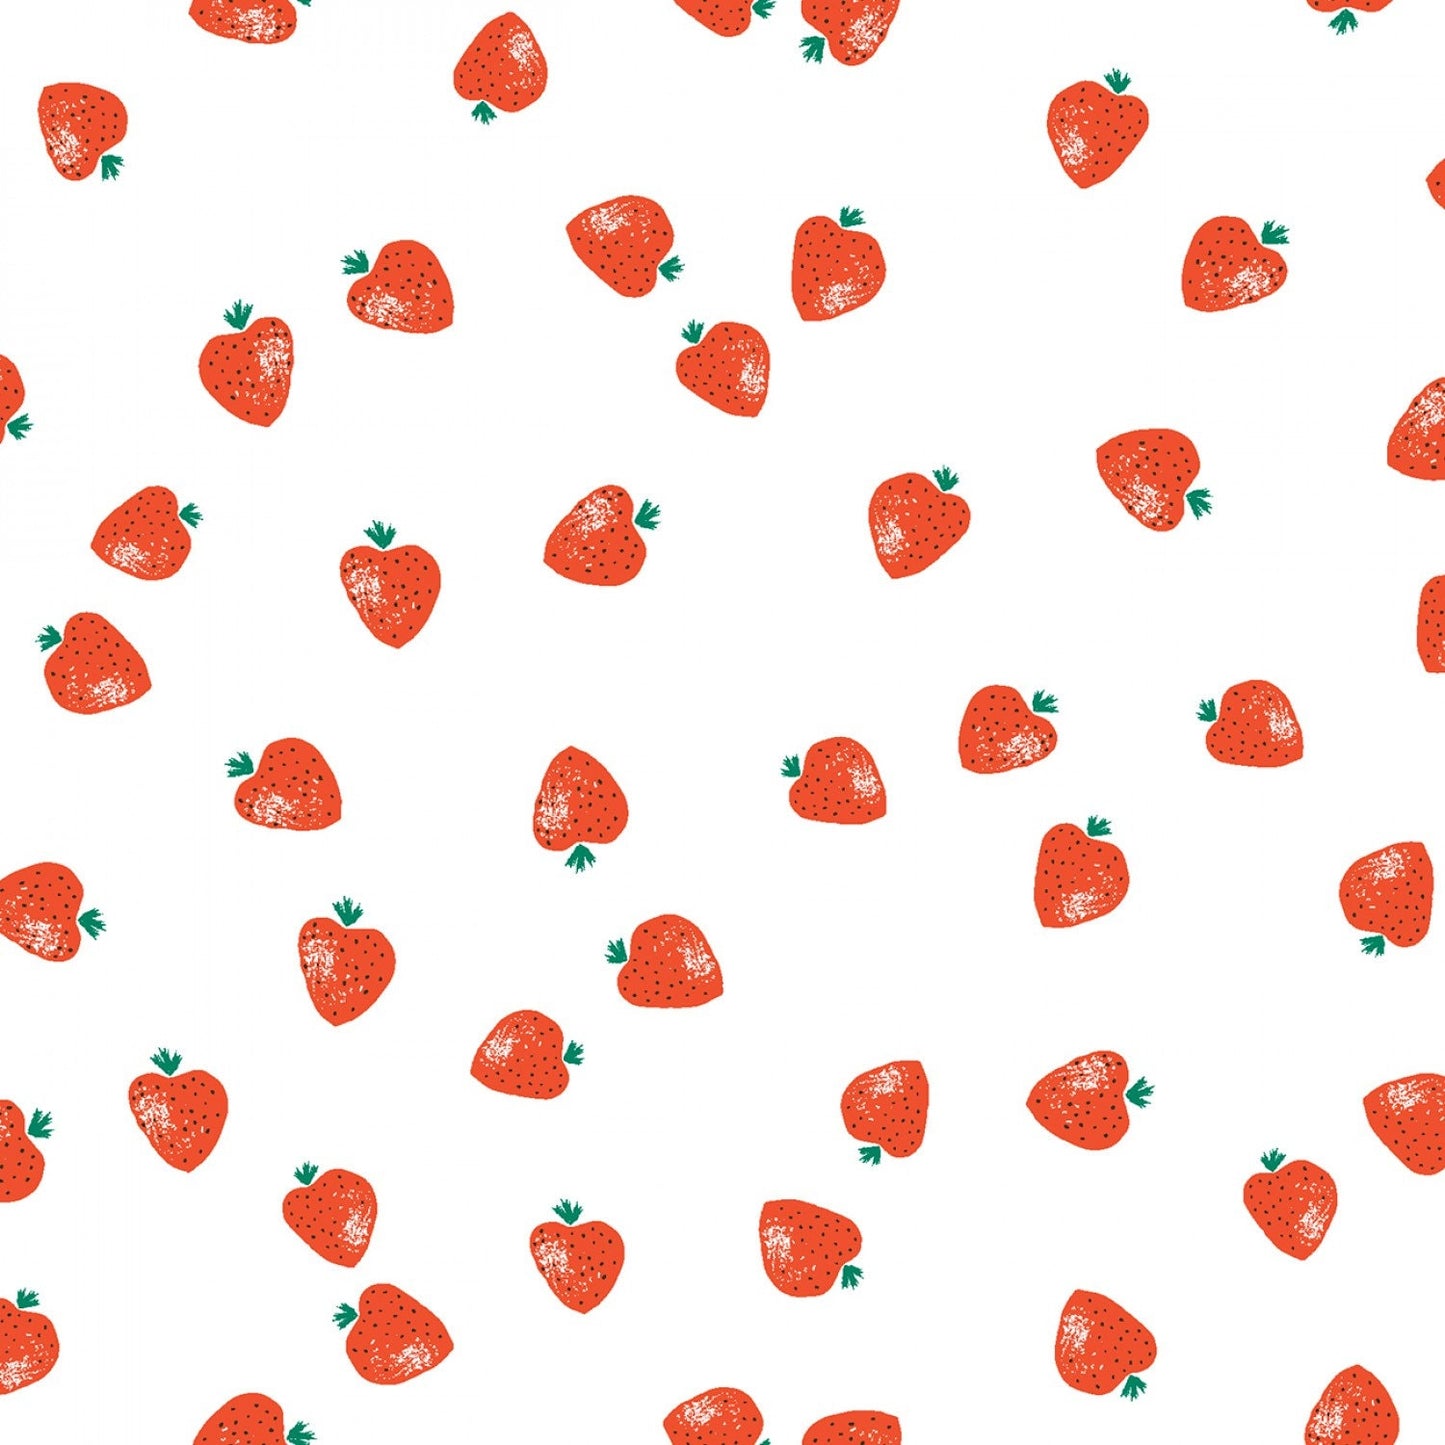 Flockstar White Strawberries ST-1265WHIT Cotton Woven Fabric